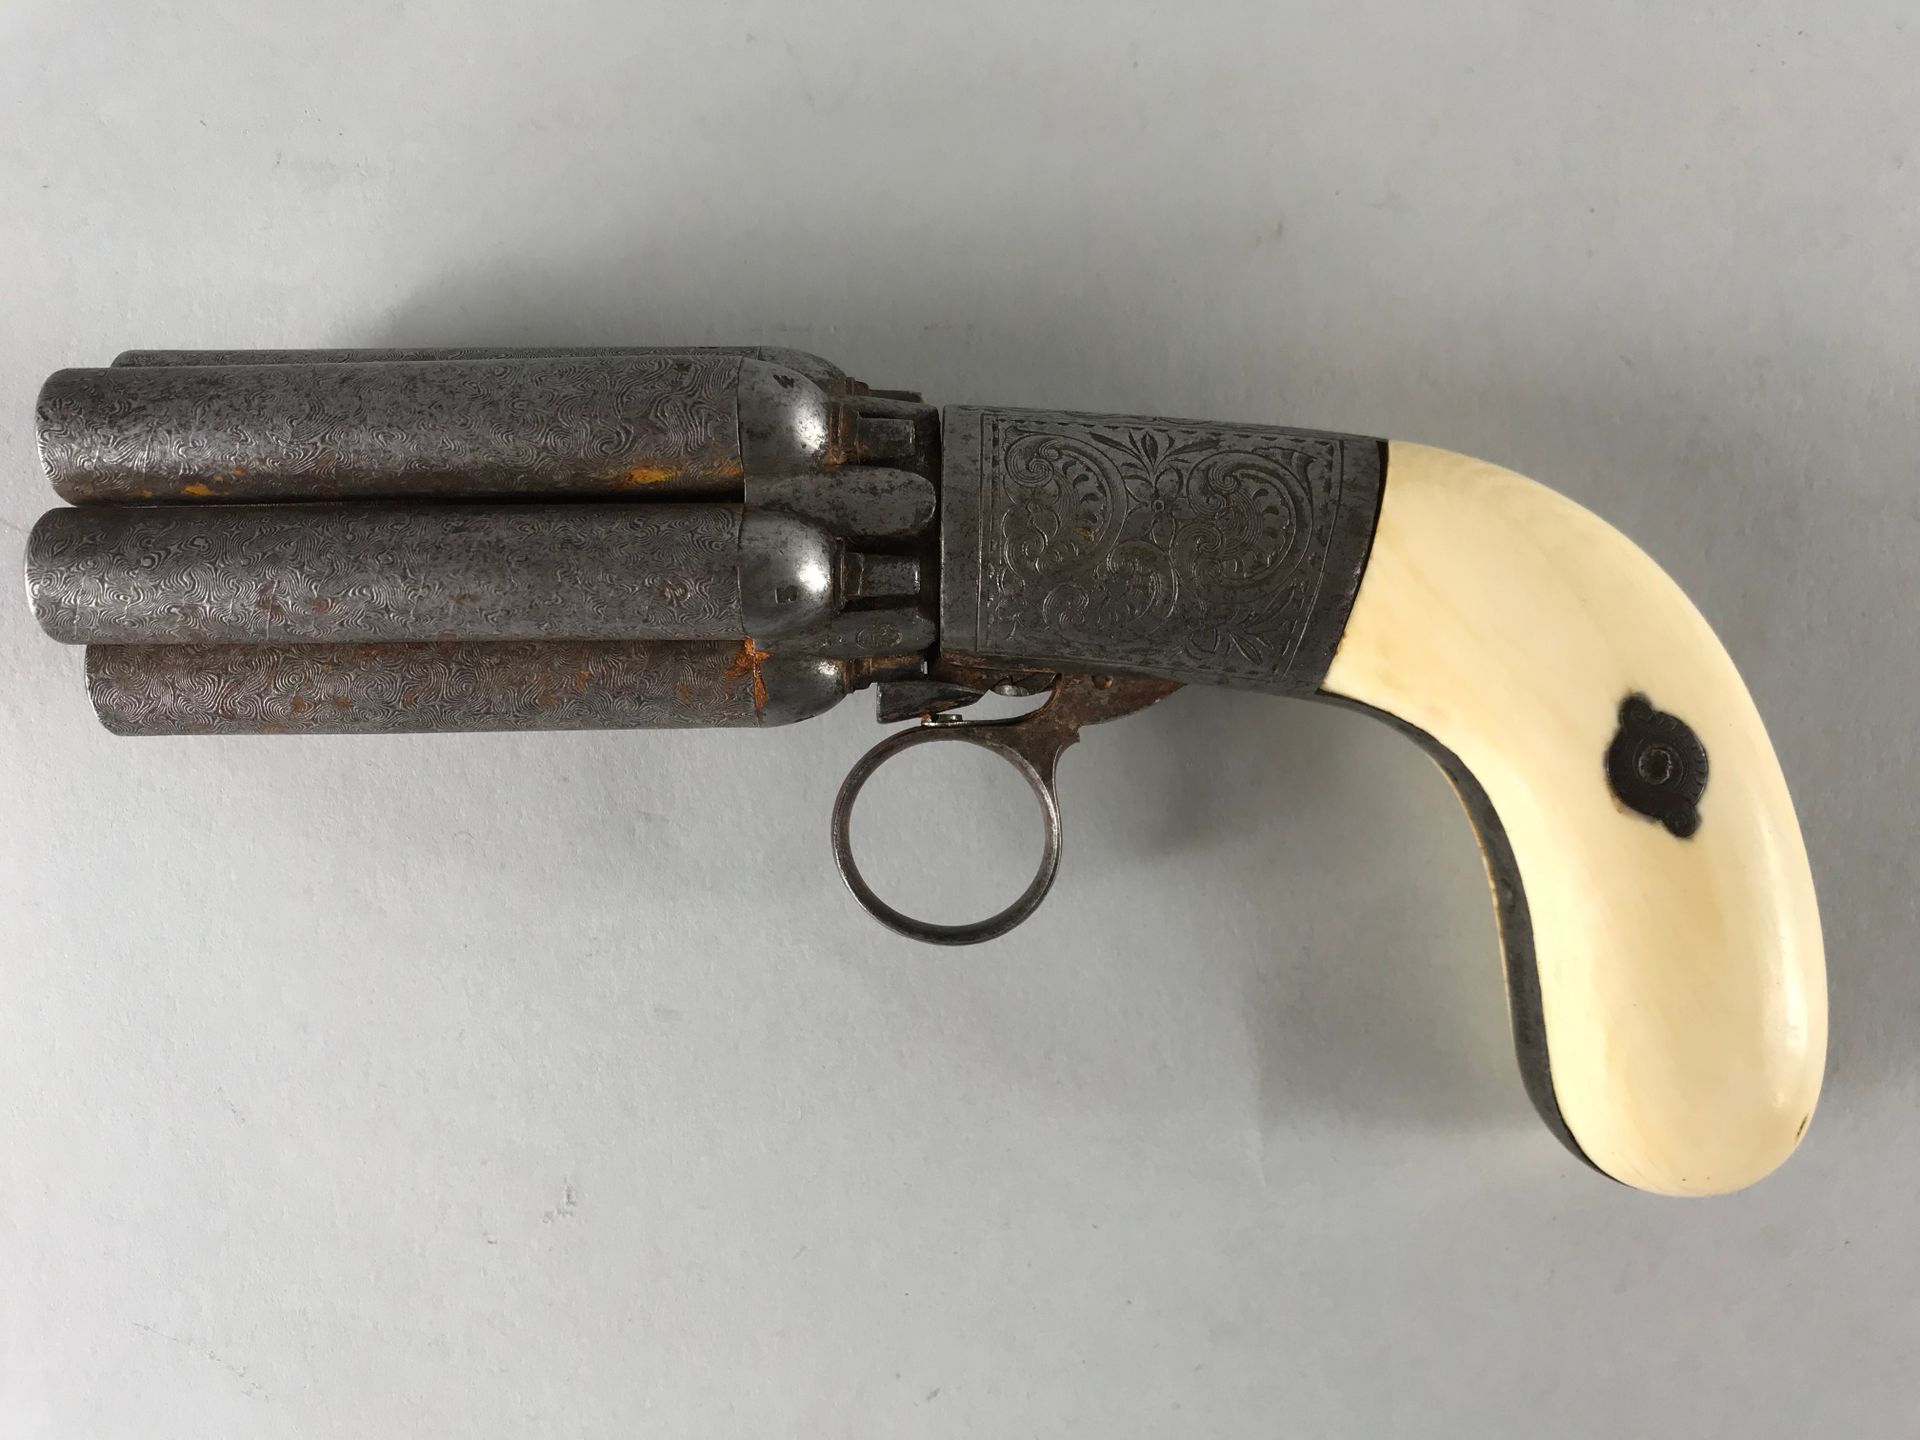 Null 
Mariette打击式胡椒盒左轮手枪。

六个大马士革枪管组成的枪组。环形触发器。

象牙色的股票板。

大约在1850年。工作机制。